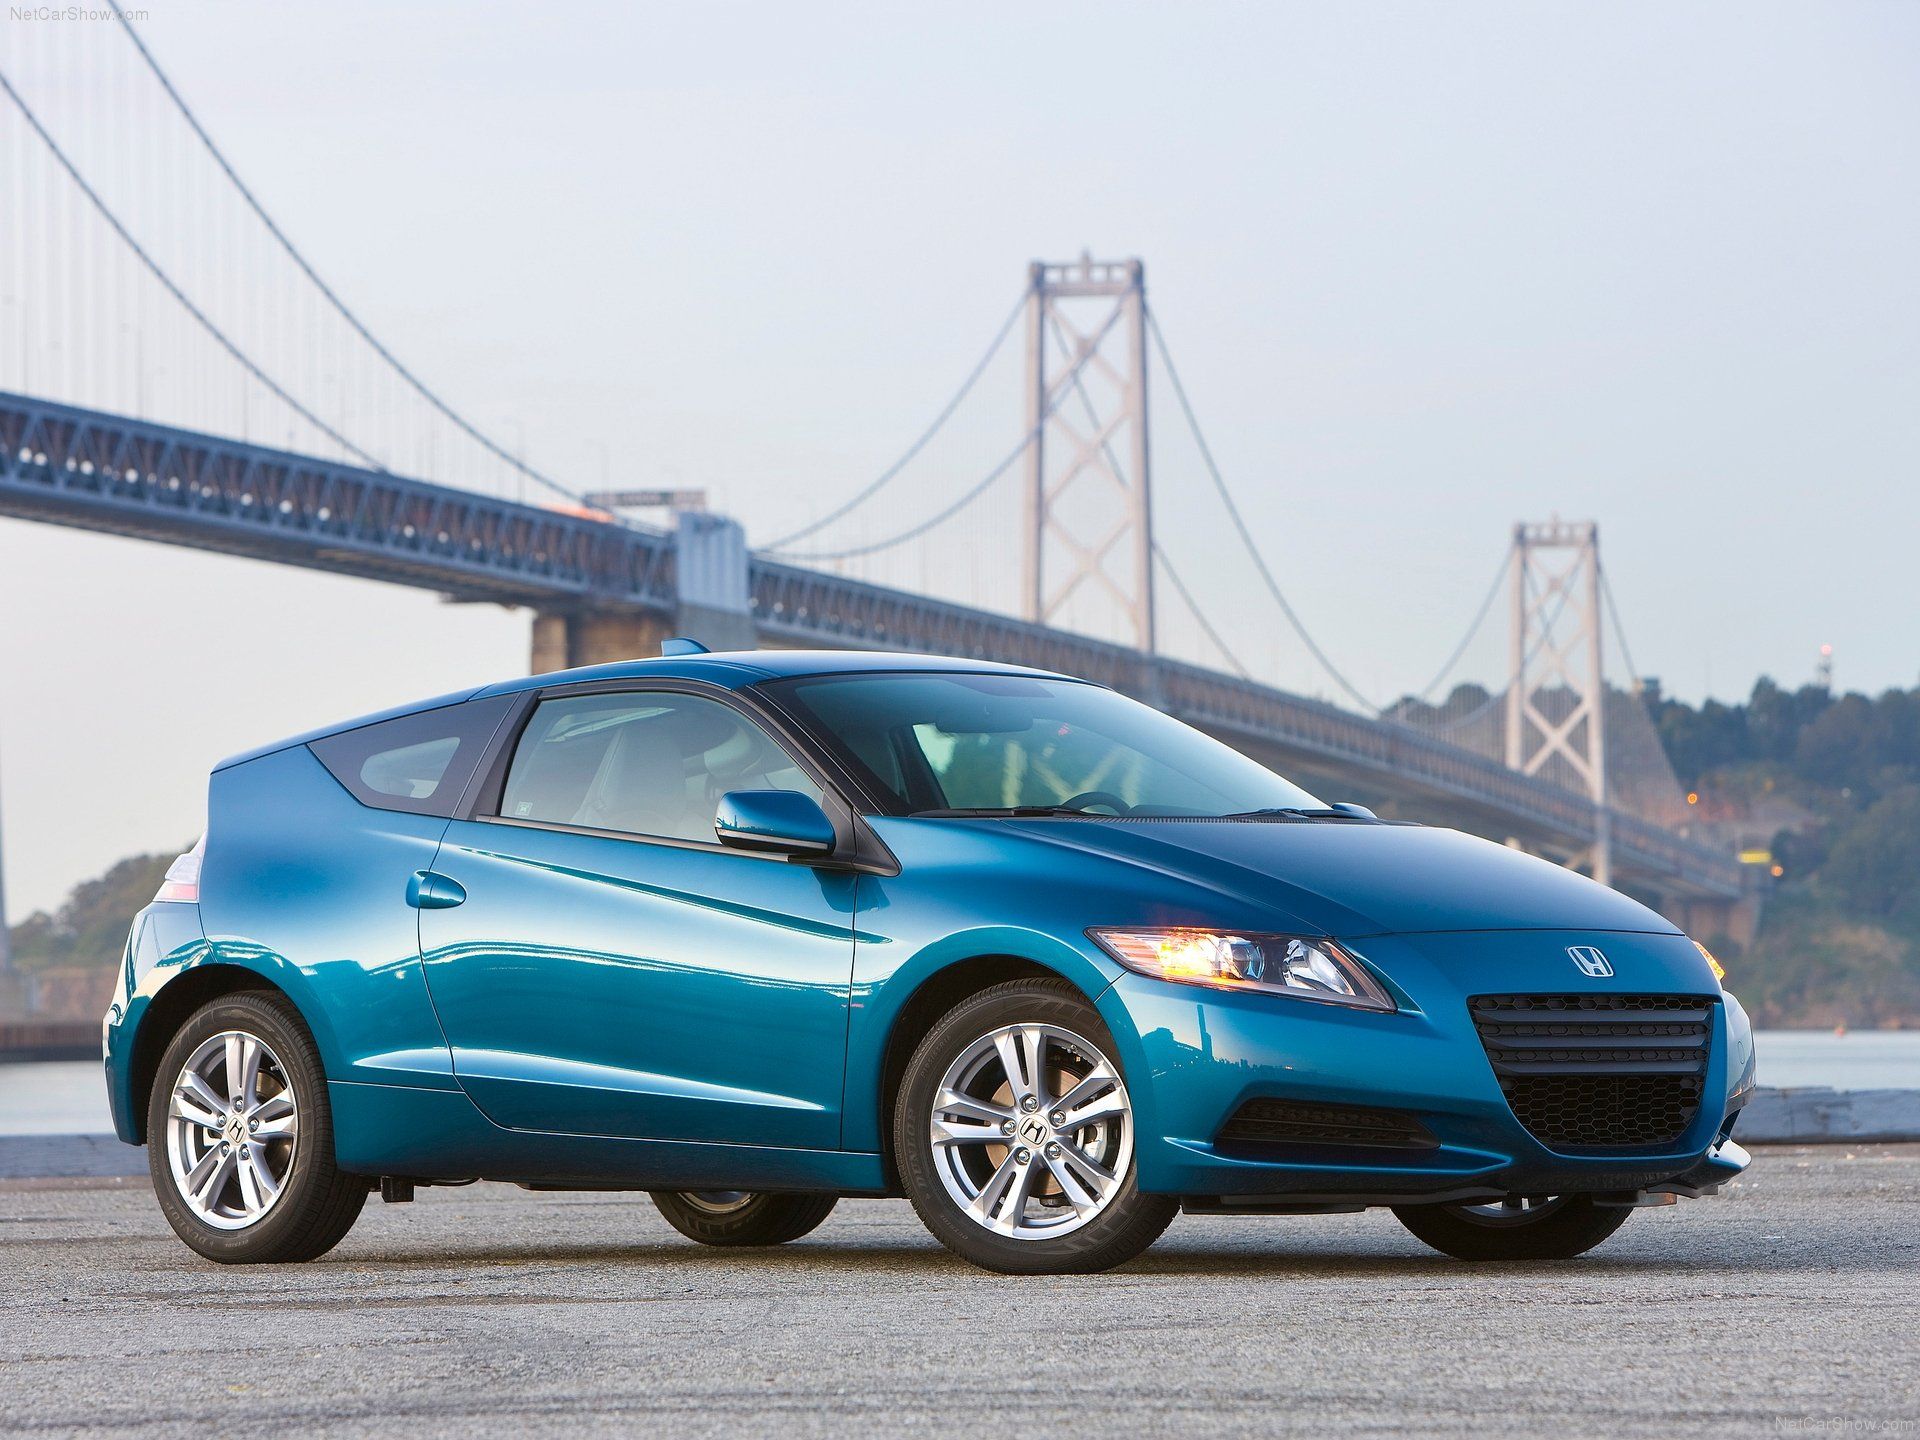 Honda Motors axes quirky CR-Z hybrid